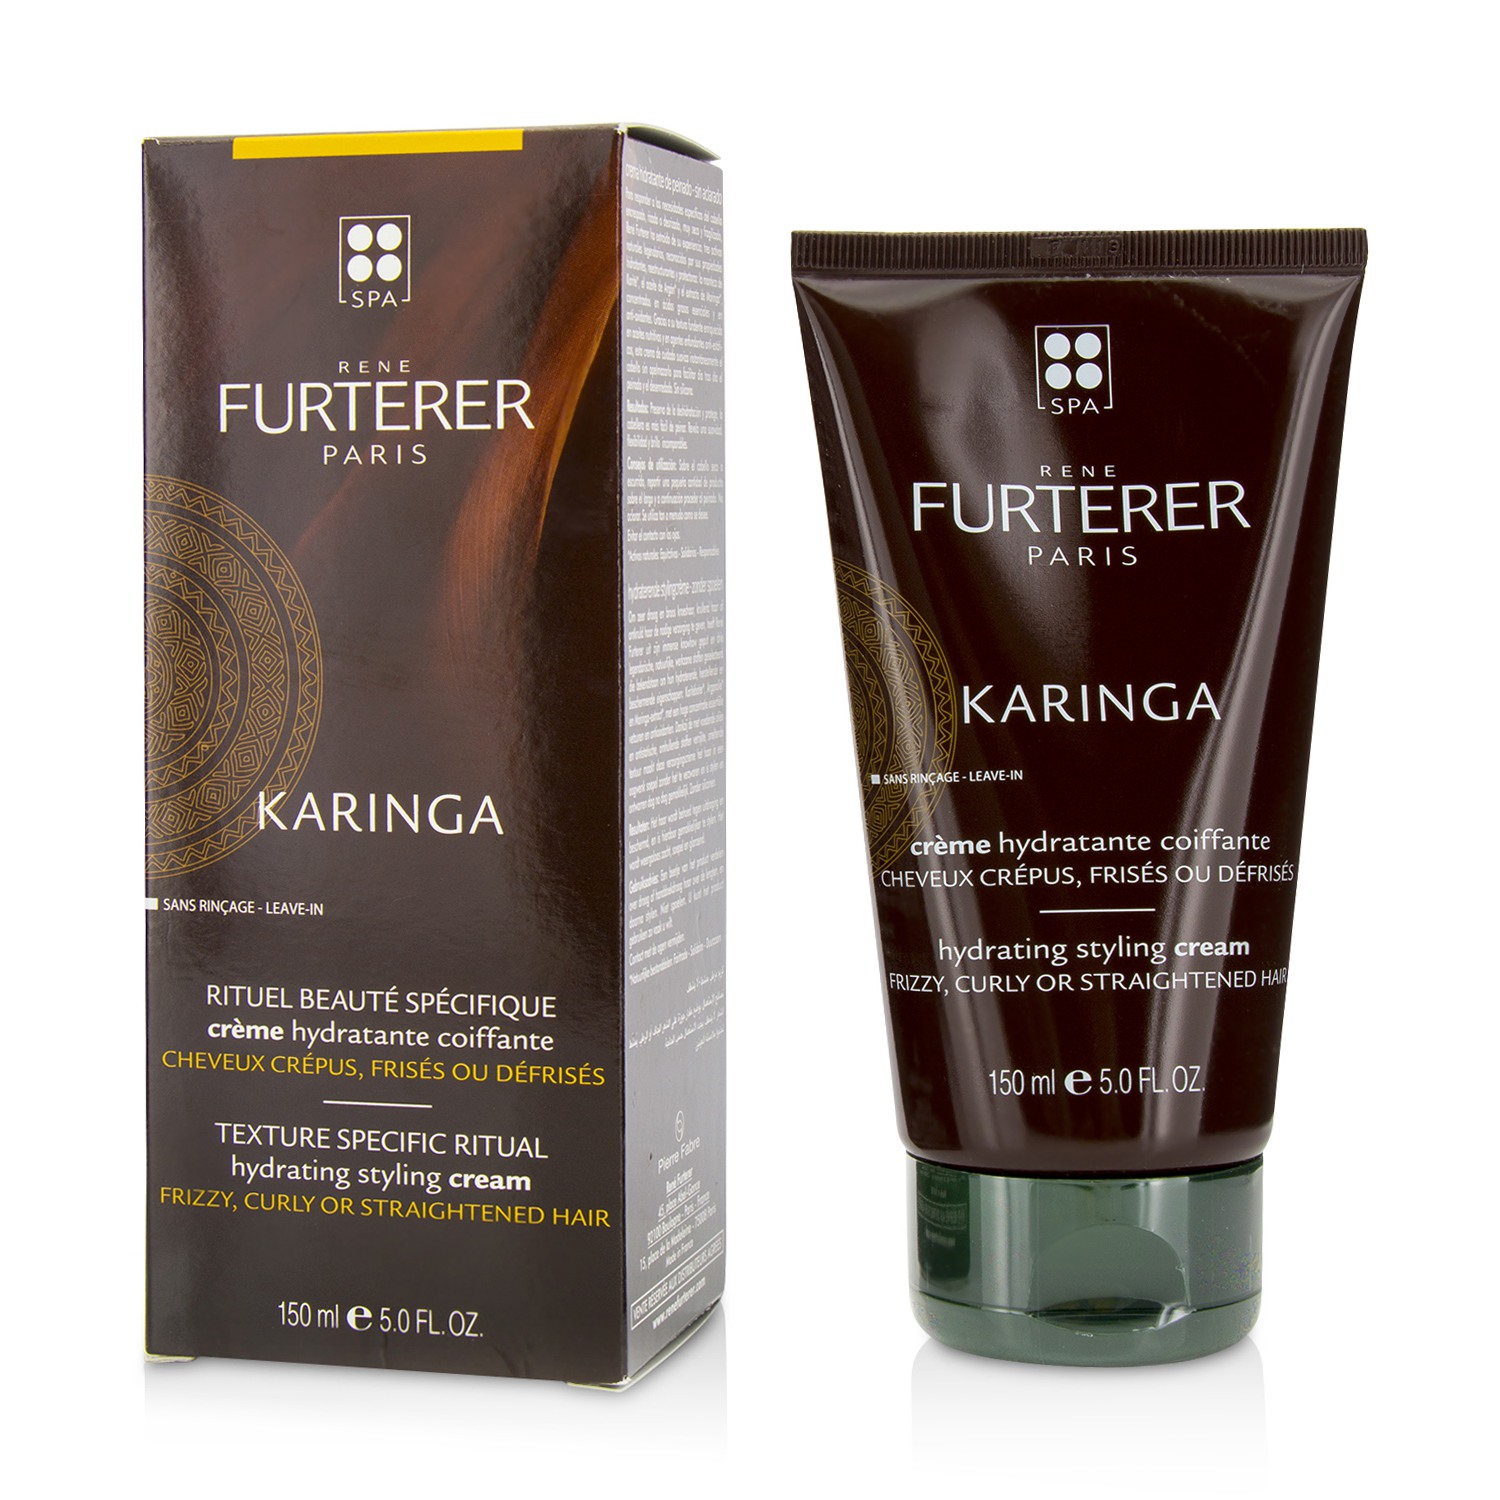 Karinga Hydrating Styling Cream (Frizzy Curly or Straightened Hair) Rene Furterer Image